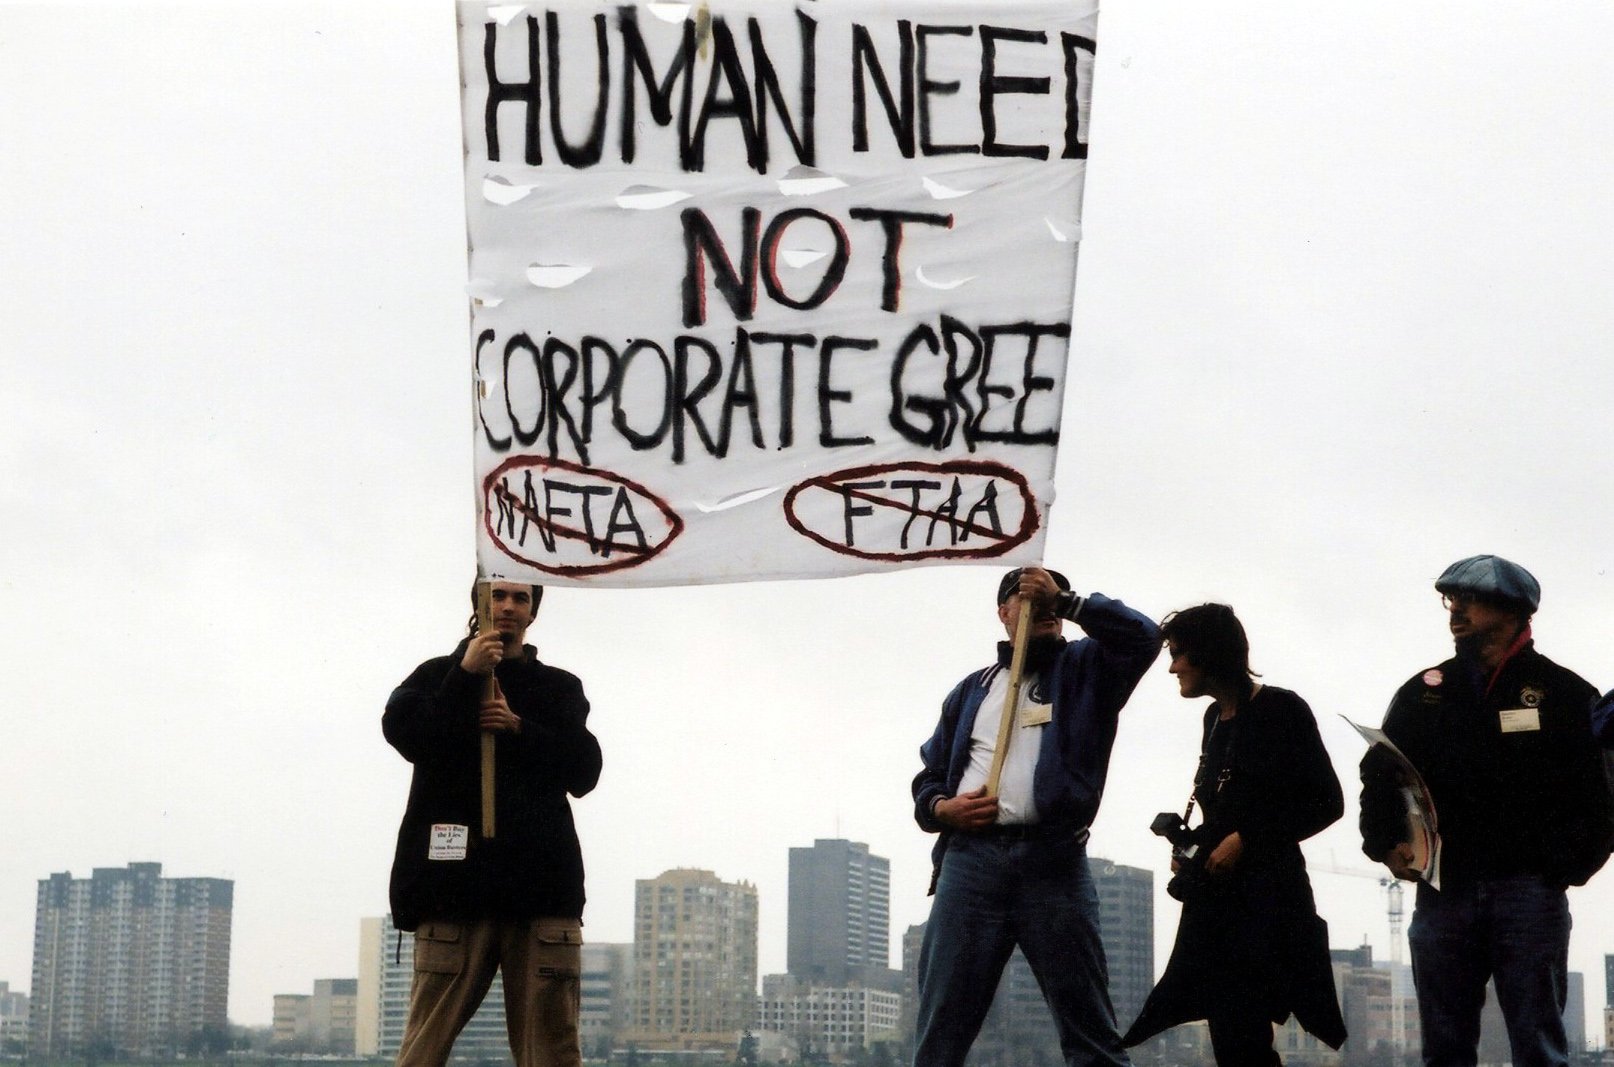 Human Need Not Corporate Greed. Detroit. USA